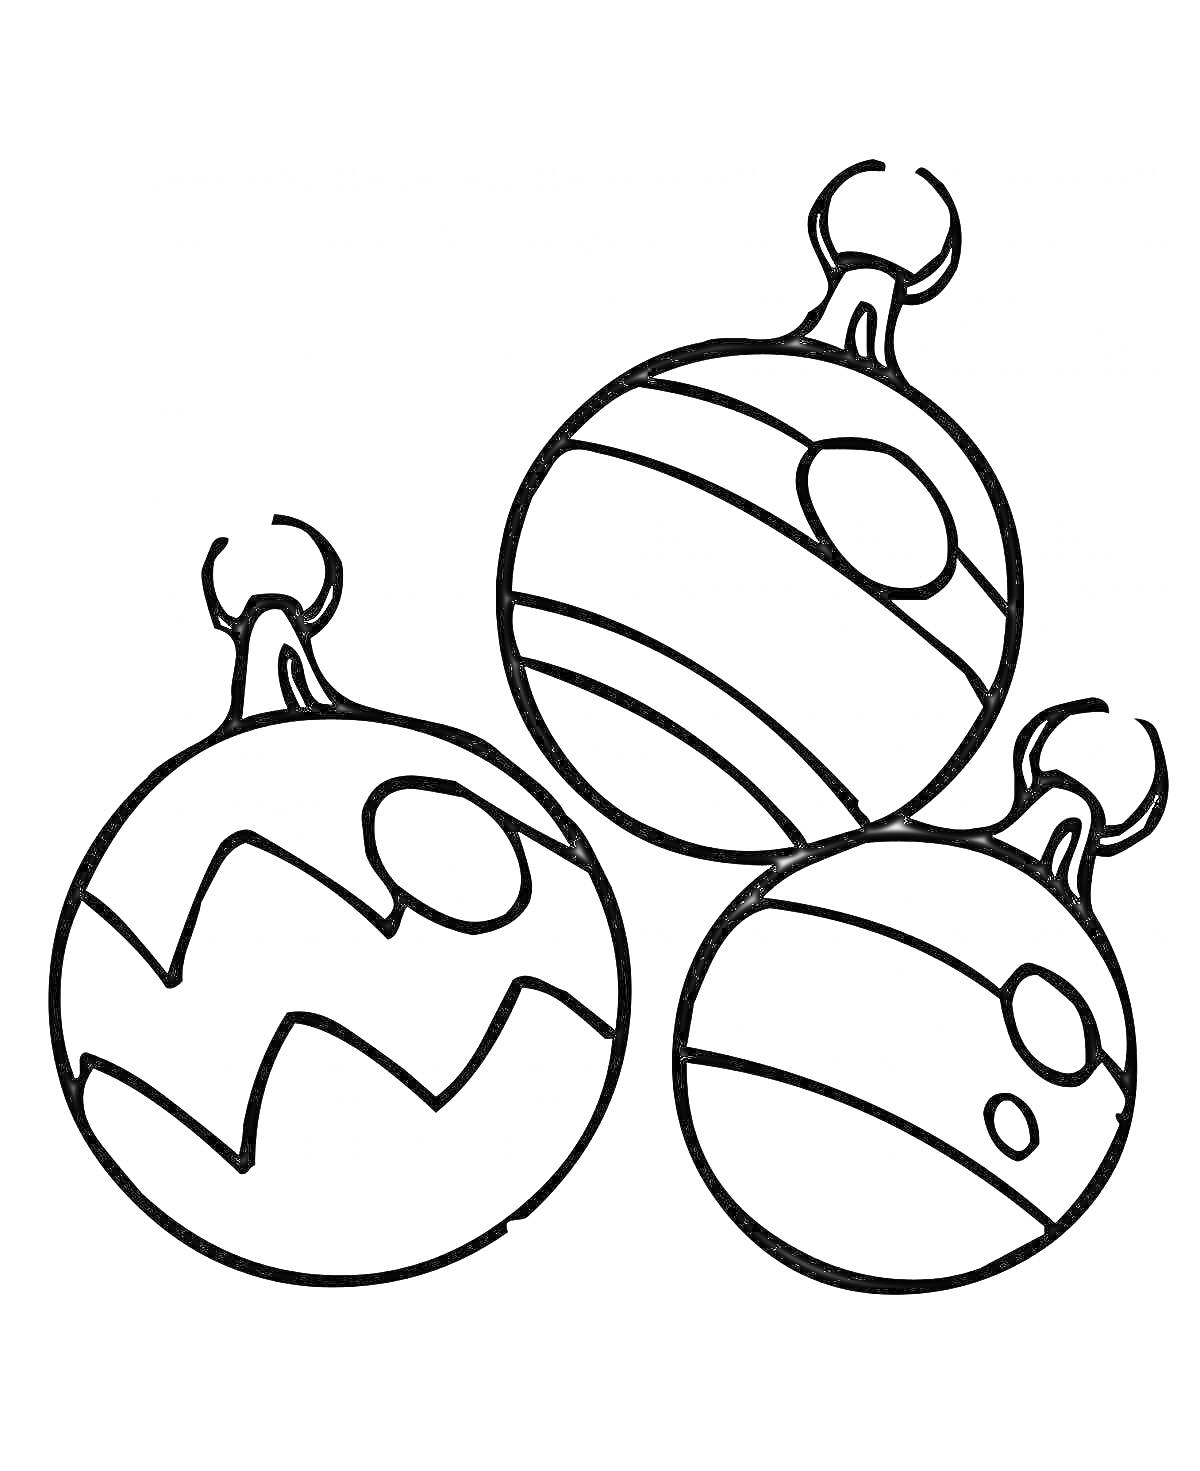 Раскраска Три елочных шара с различными узорами (зигзагами, линиями и точками)